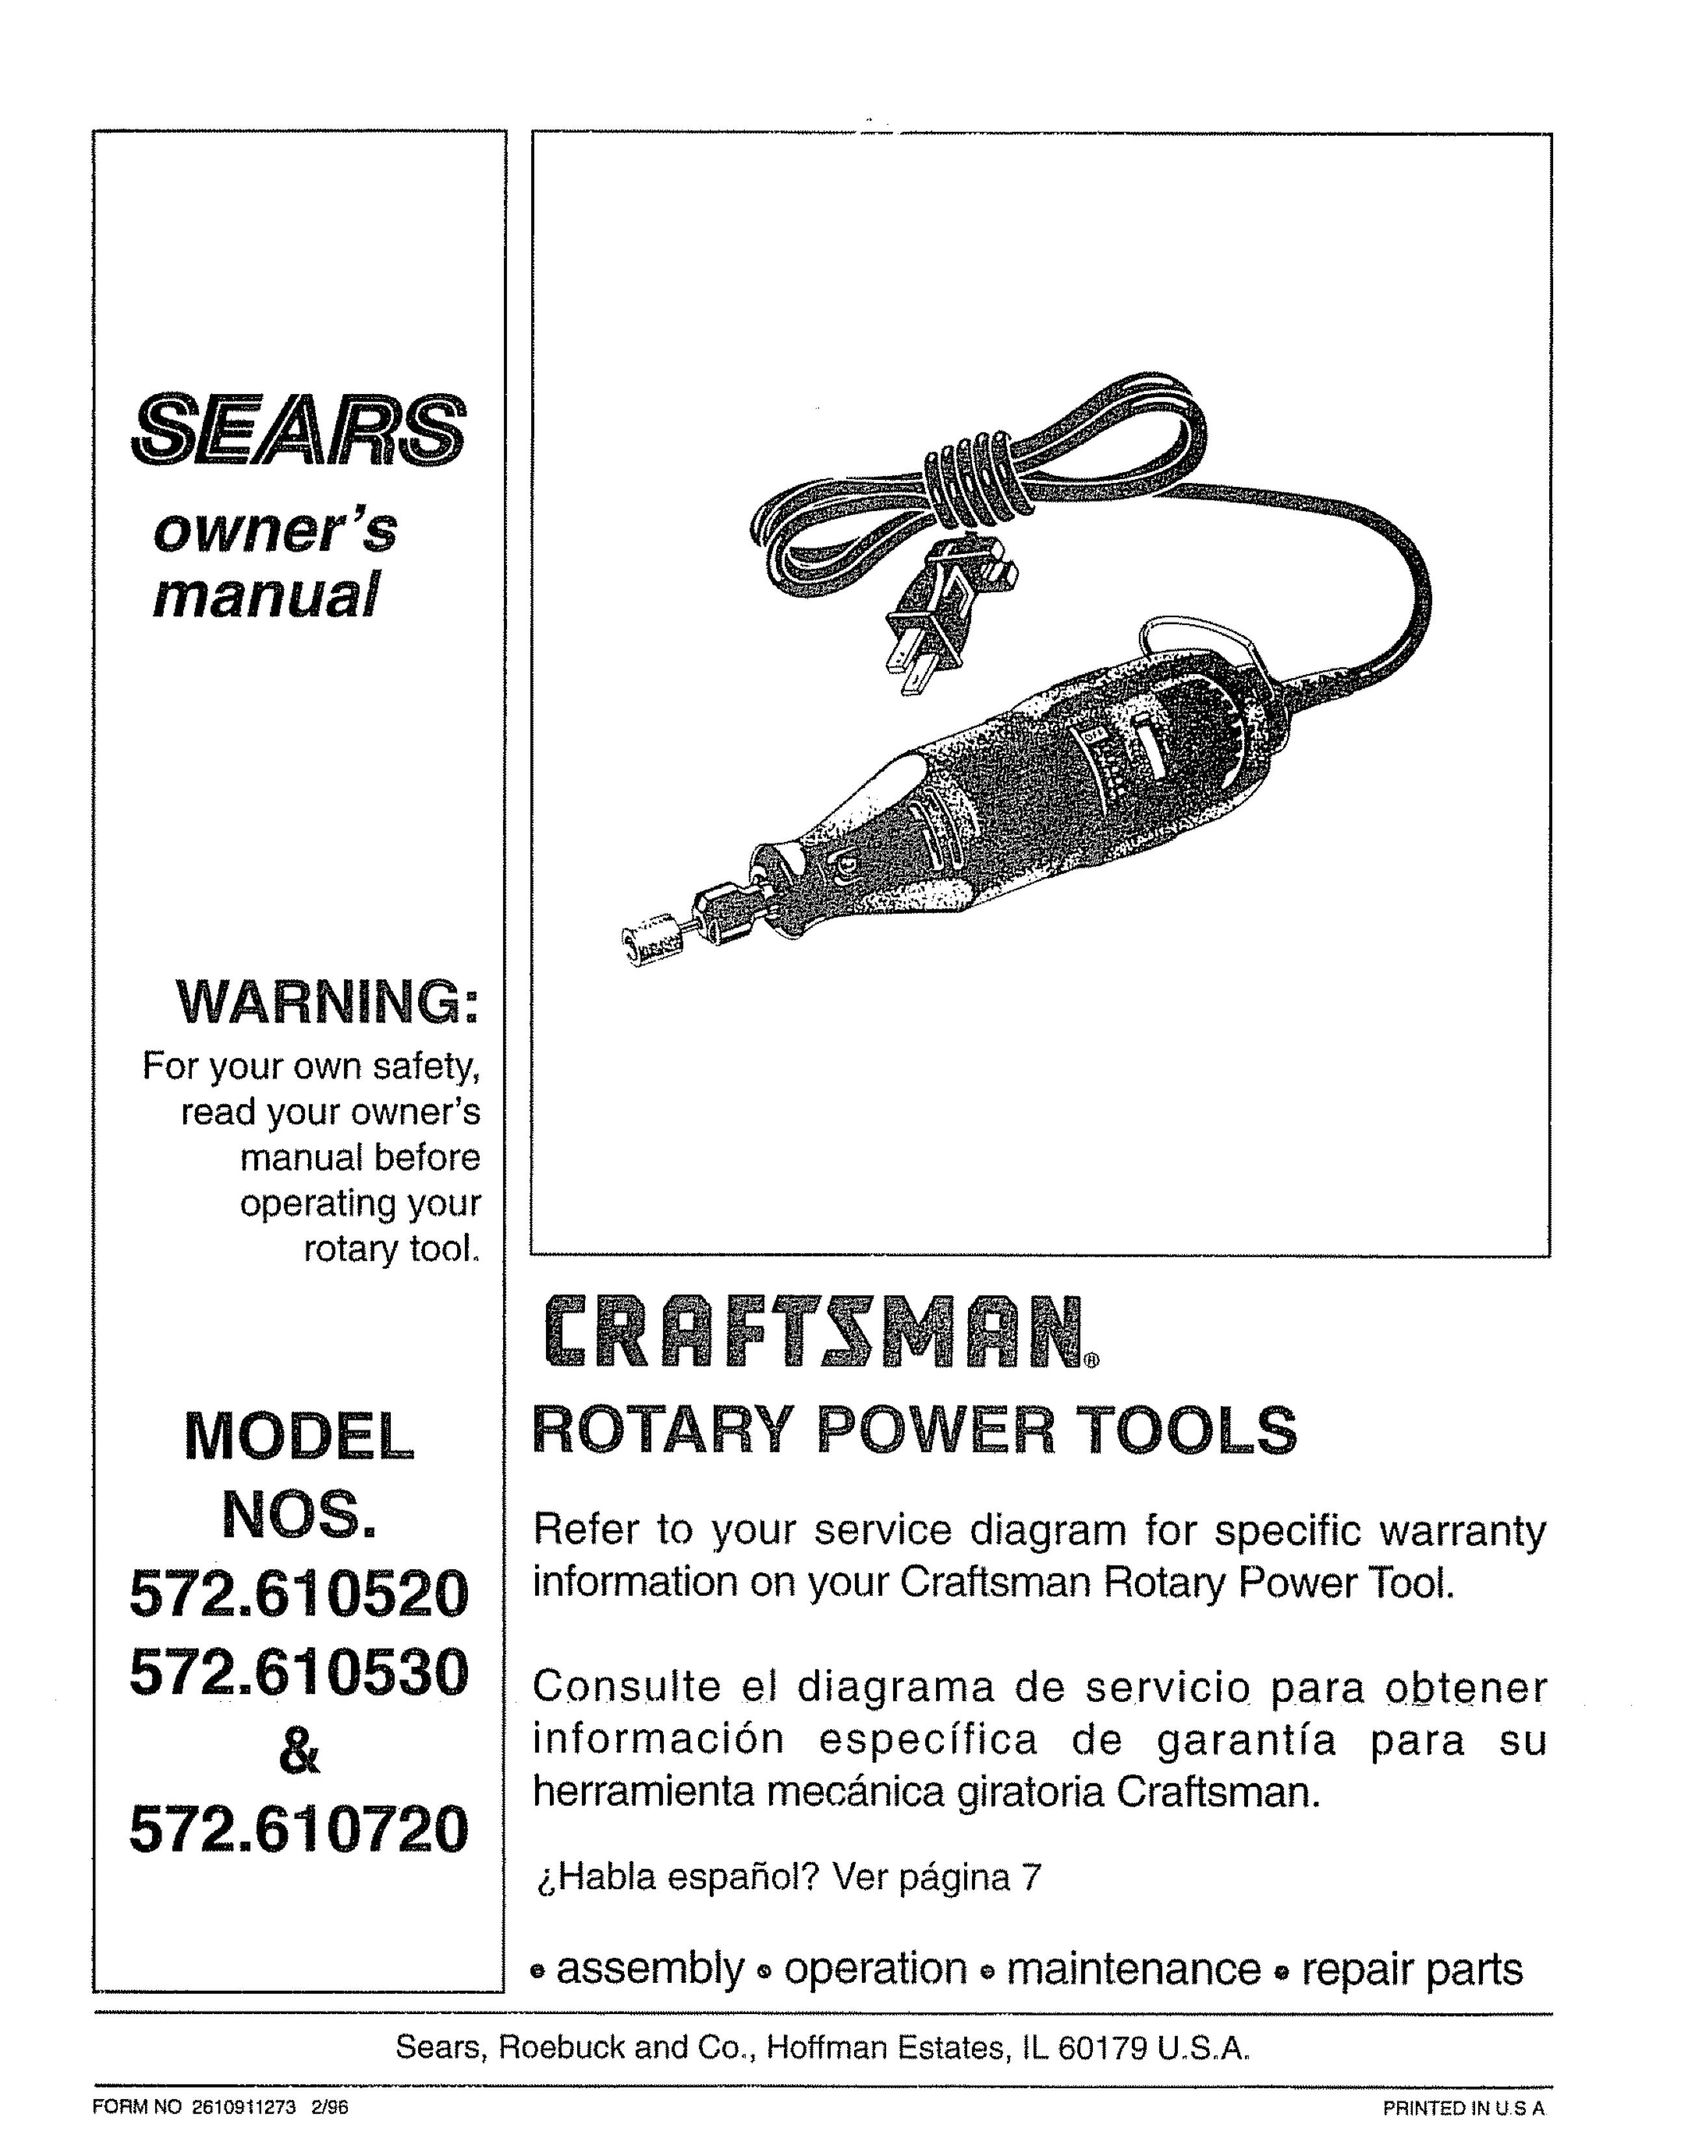 Craftsman 572.610520 Drill User Manual